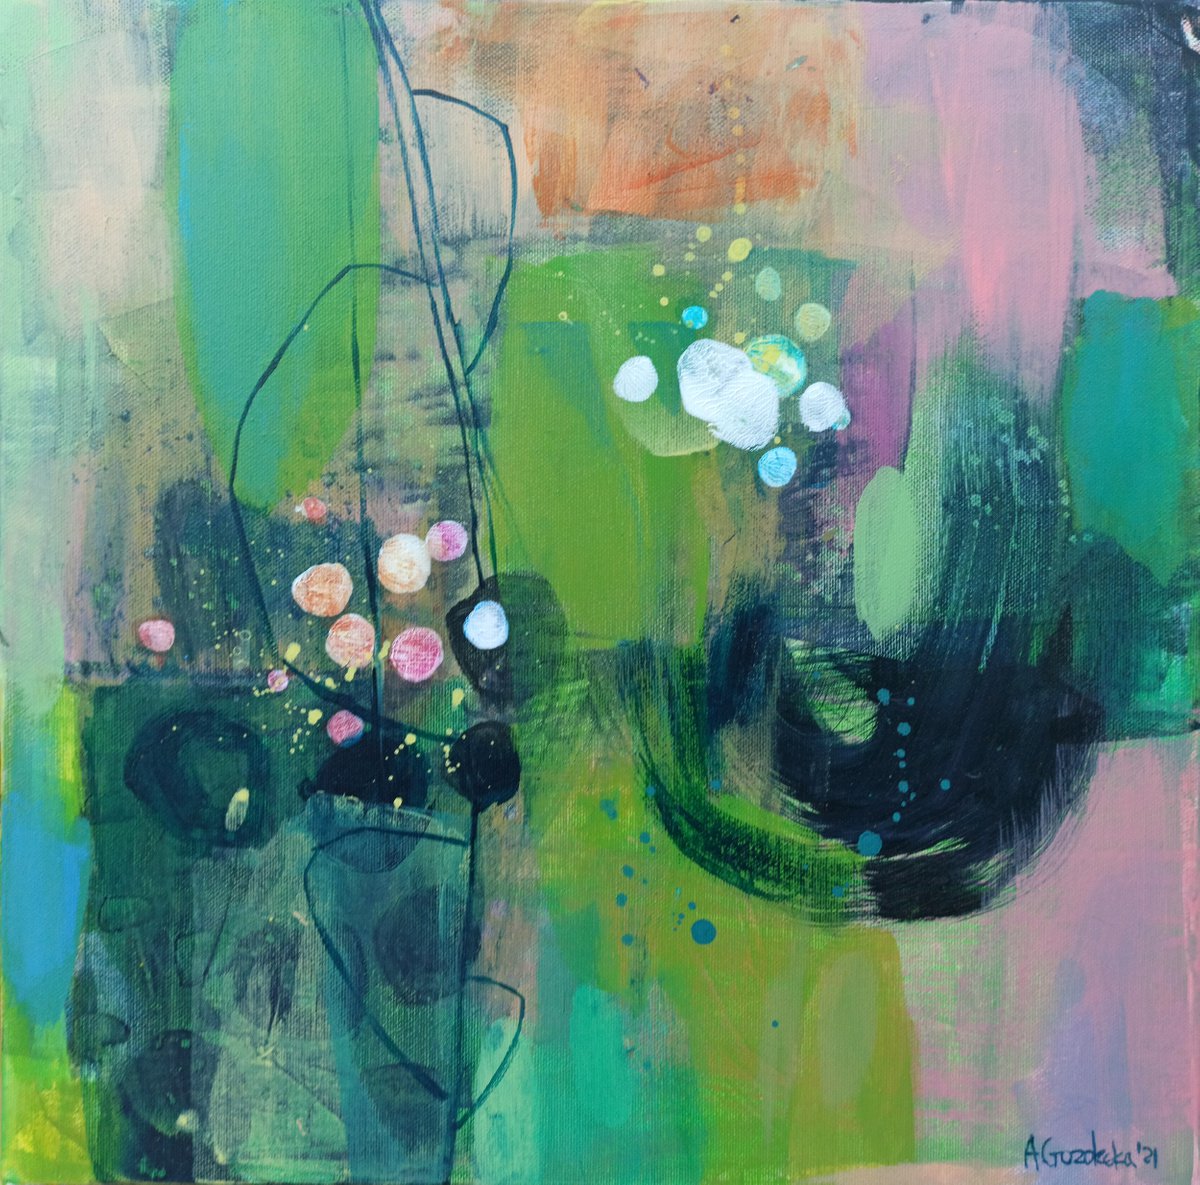 Spring Reflections 2 by Anna Masiul-Gozdecka